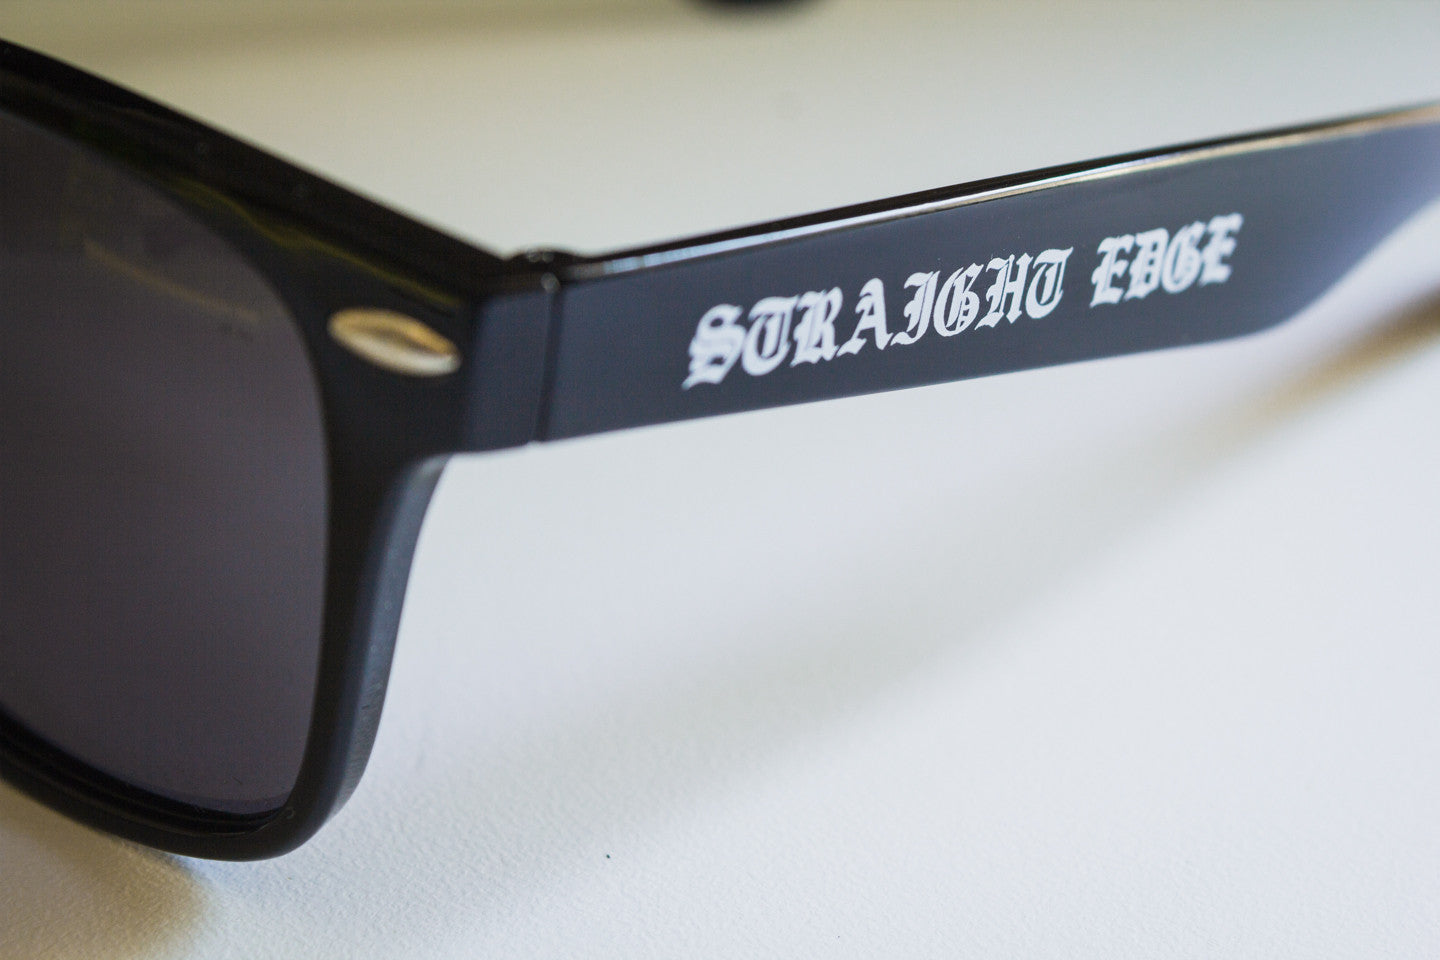 Straight Edge sunglasses